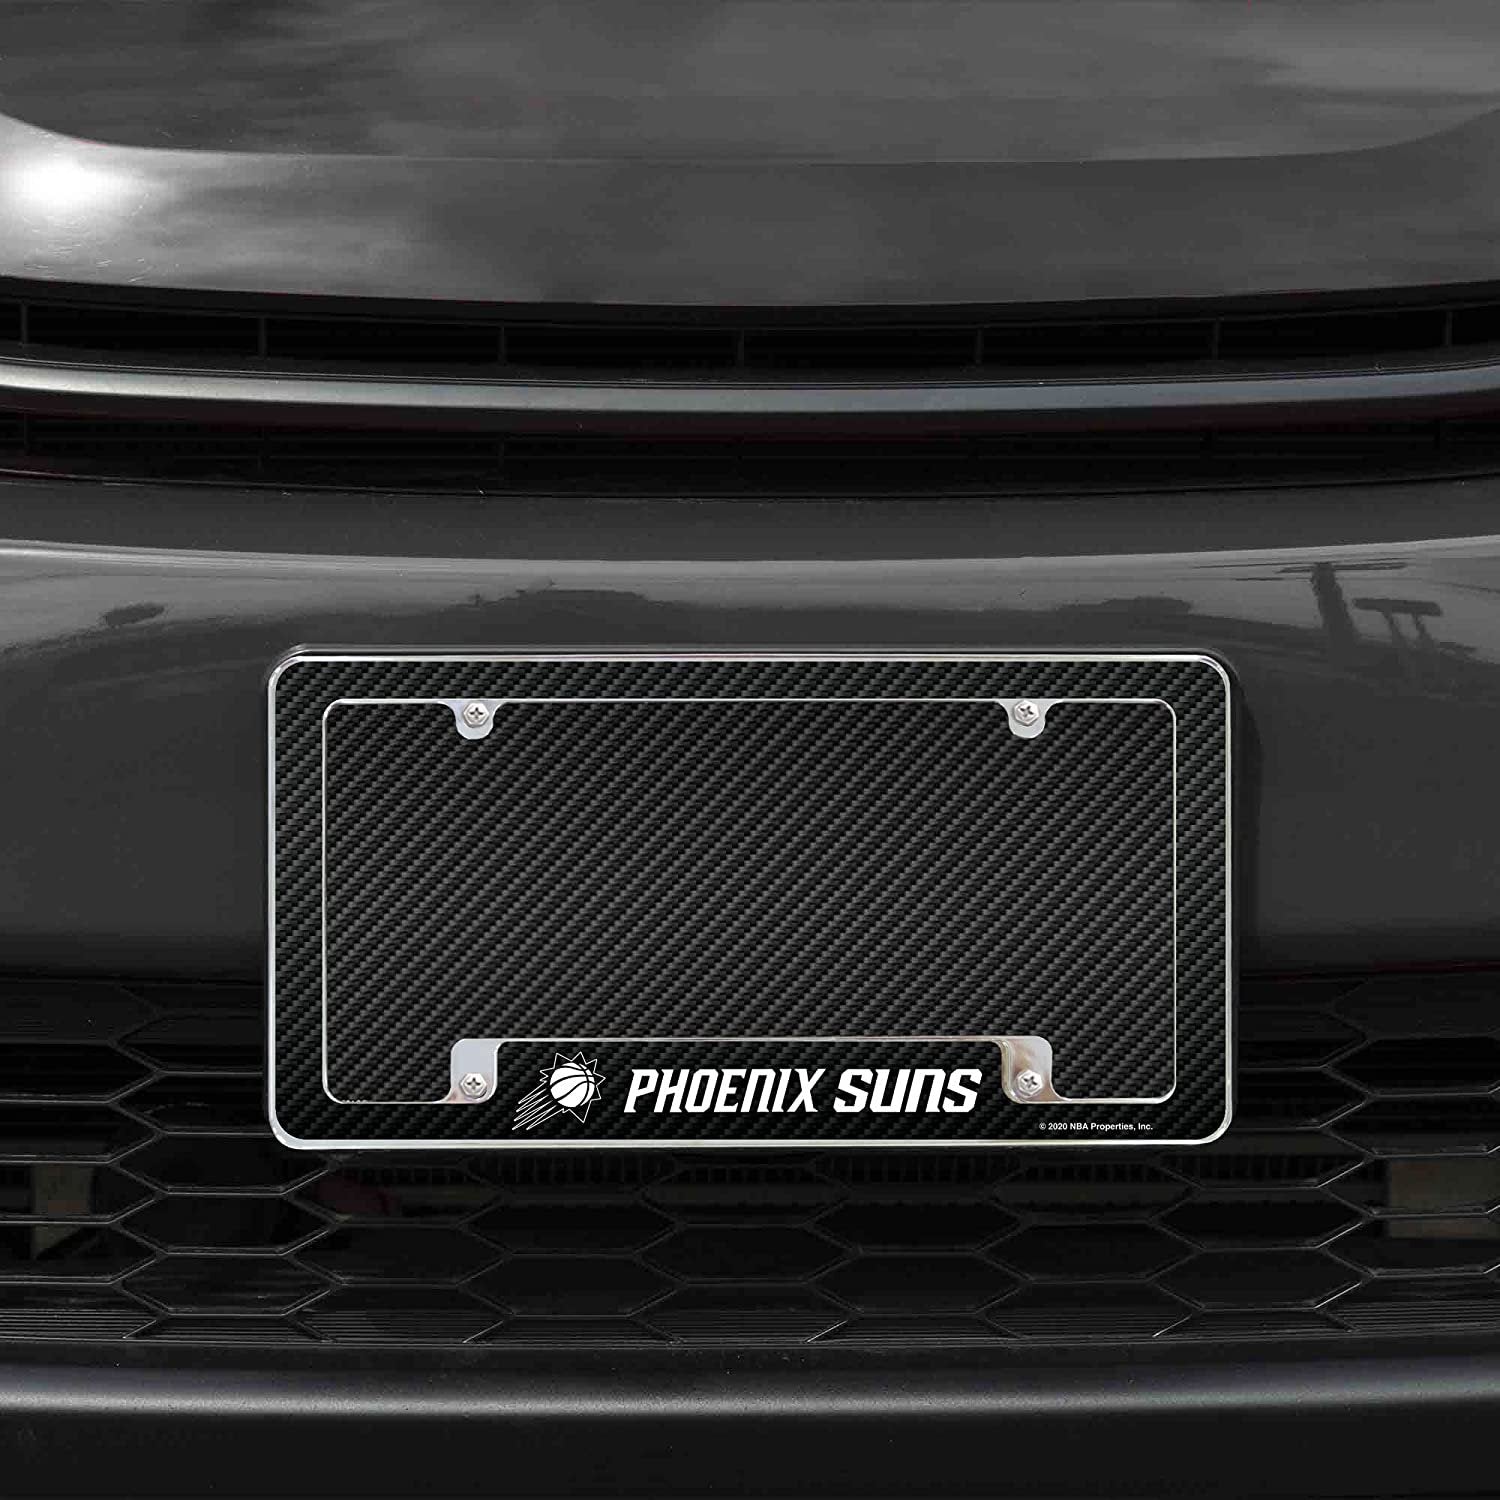 Phoenix Suns Metal License Plate Frame Chrome Tag Cover Carbon Fiber Design 6x12 Inch